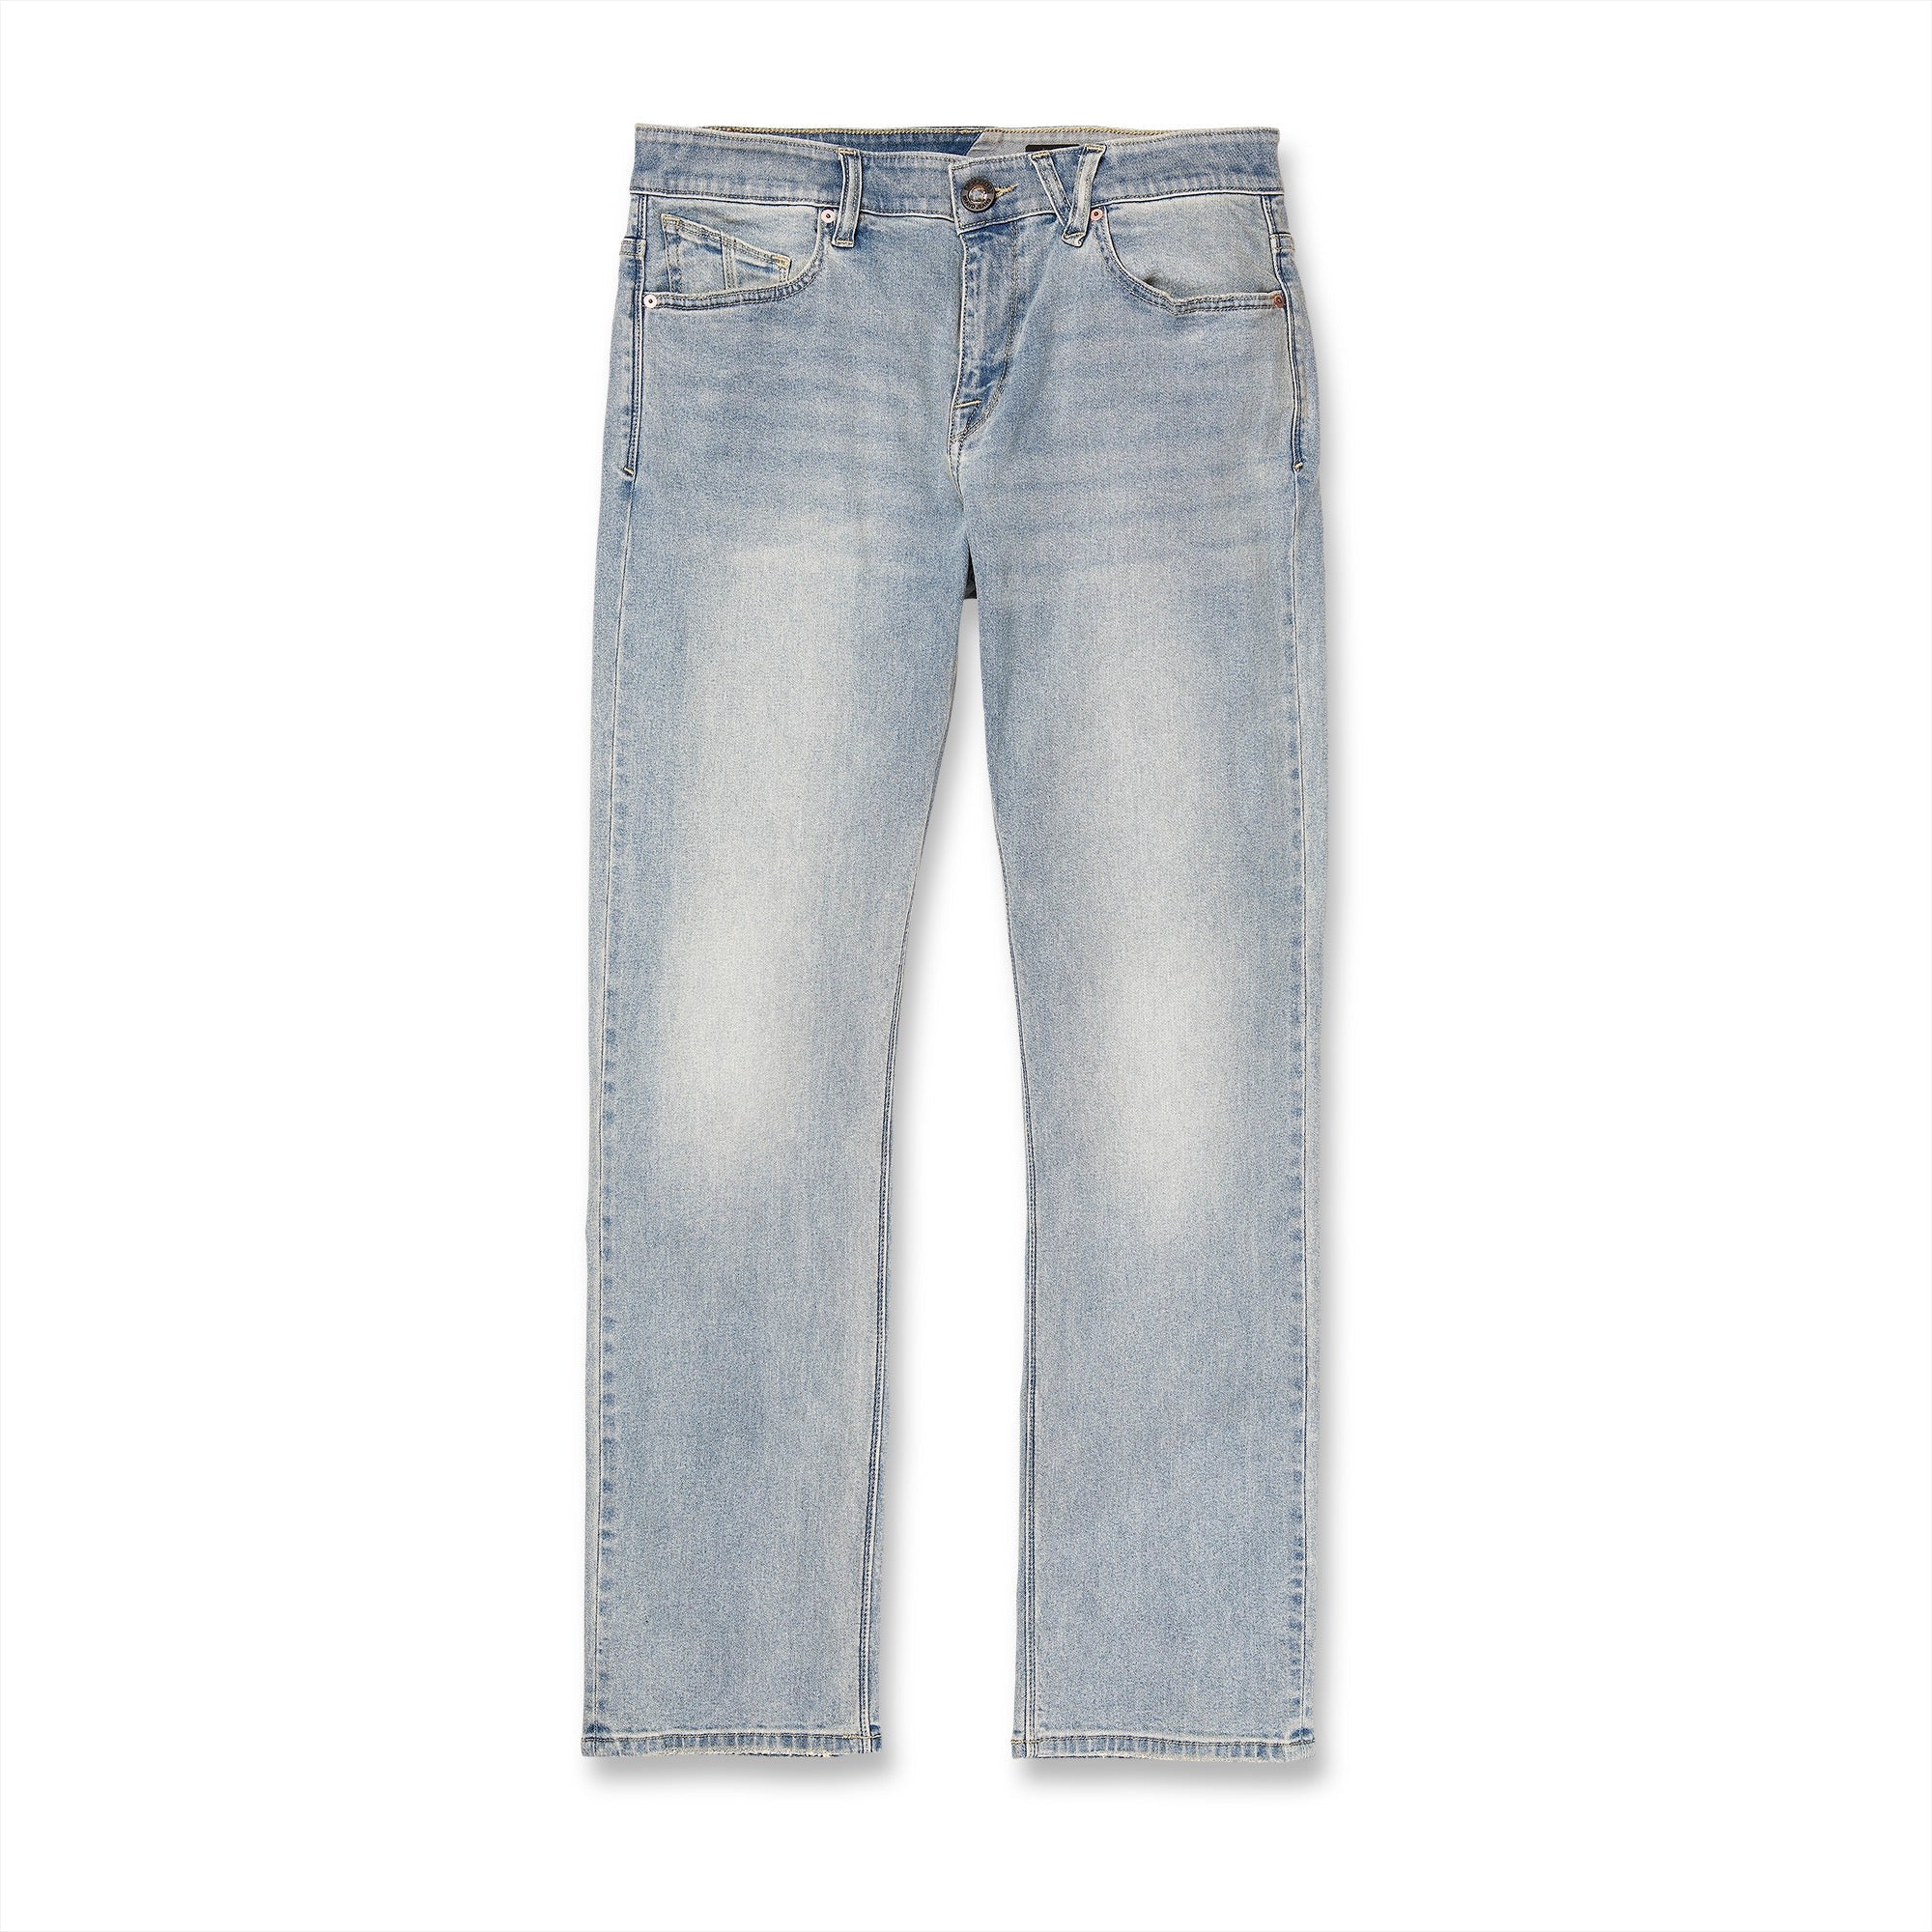 jeans_solver_denim_volcom_hombre__worker_indigo_vintage